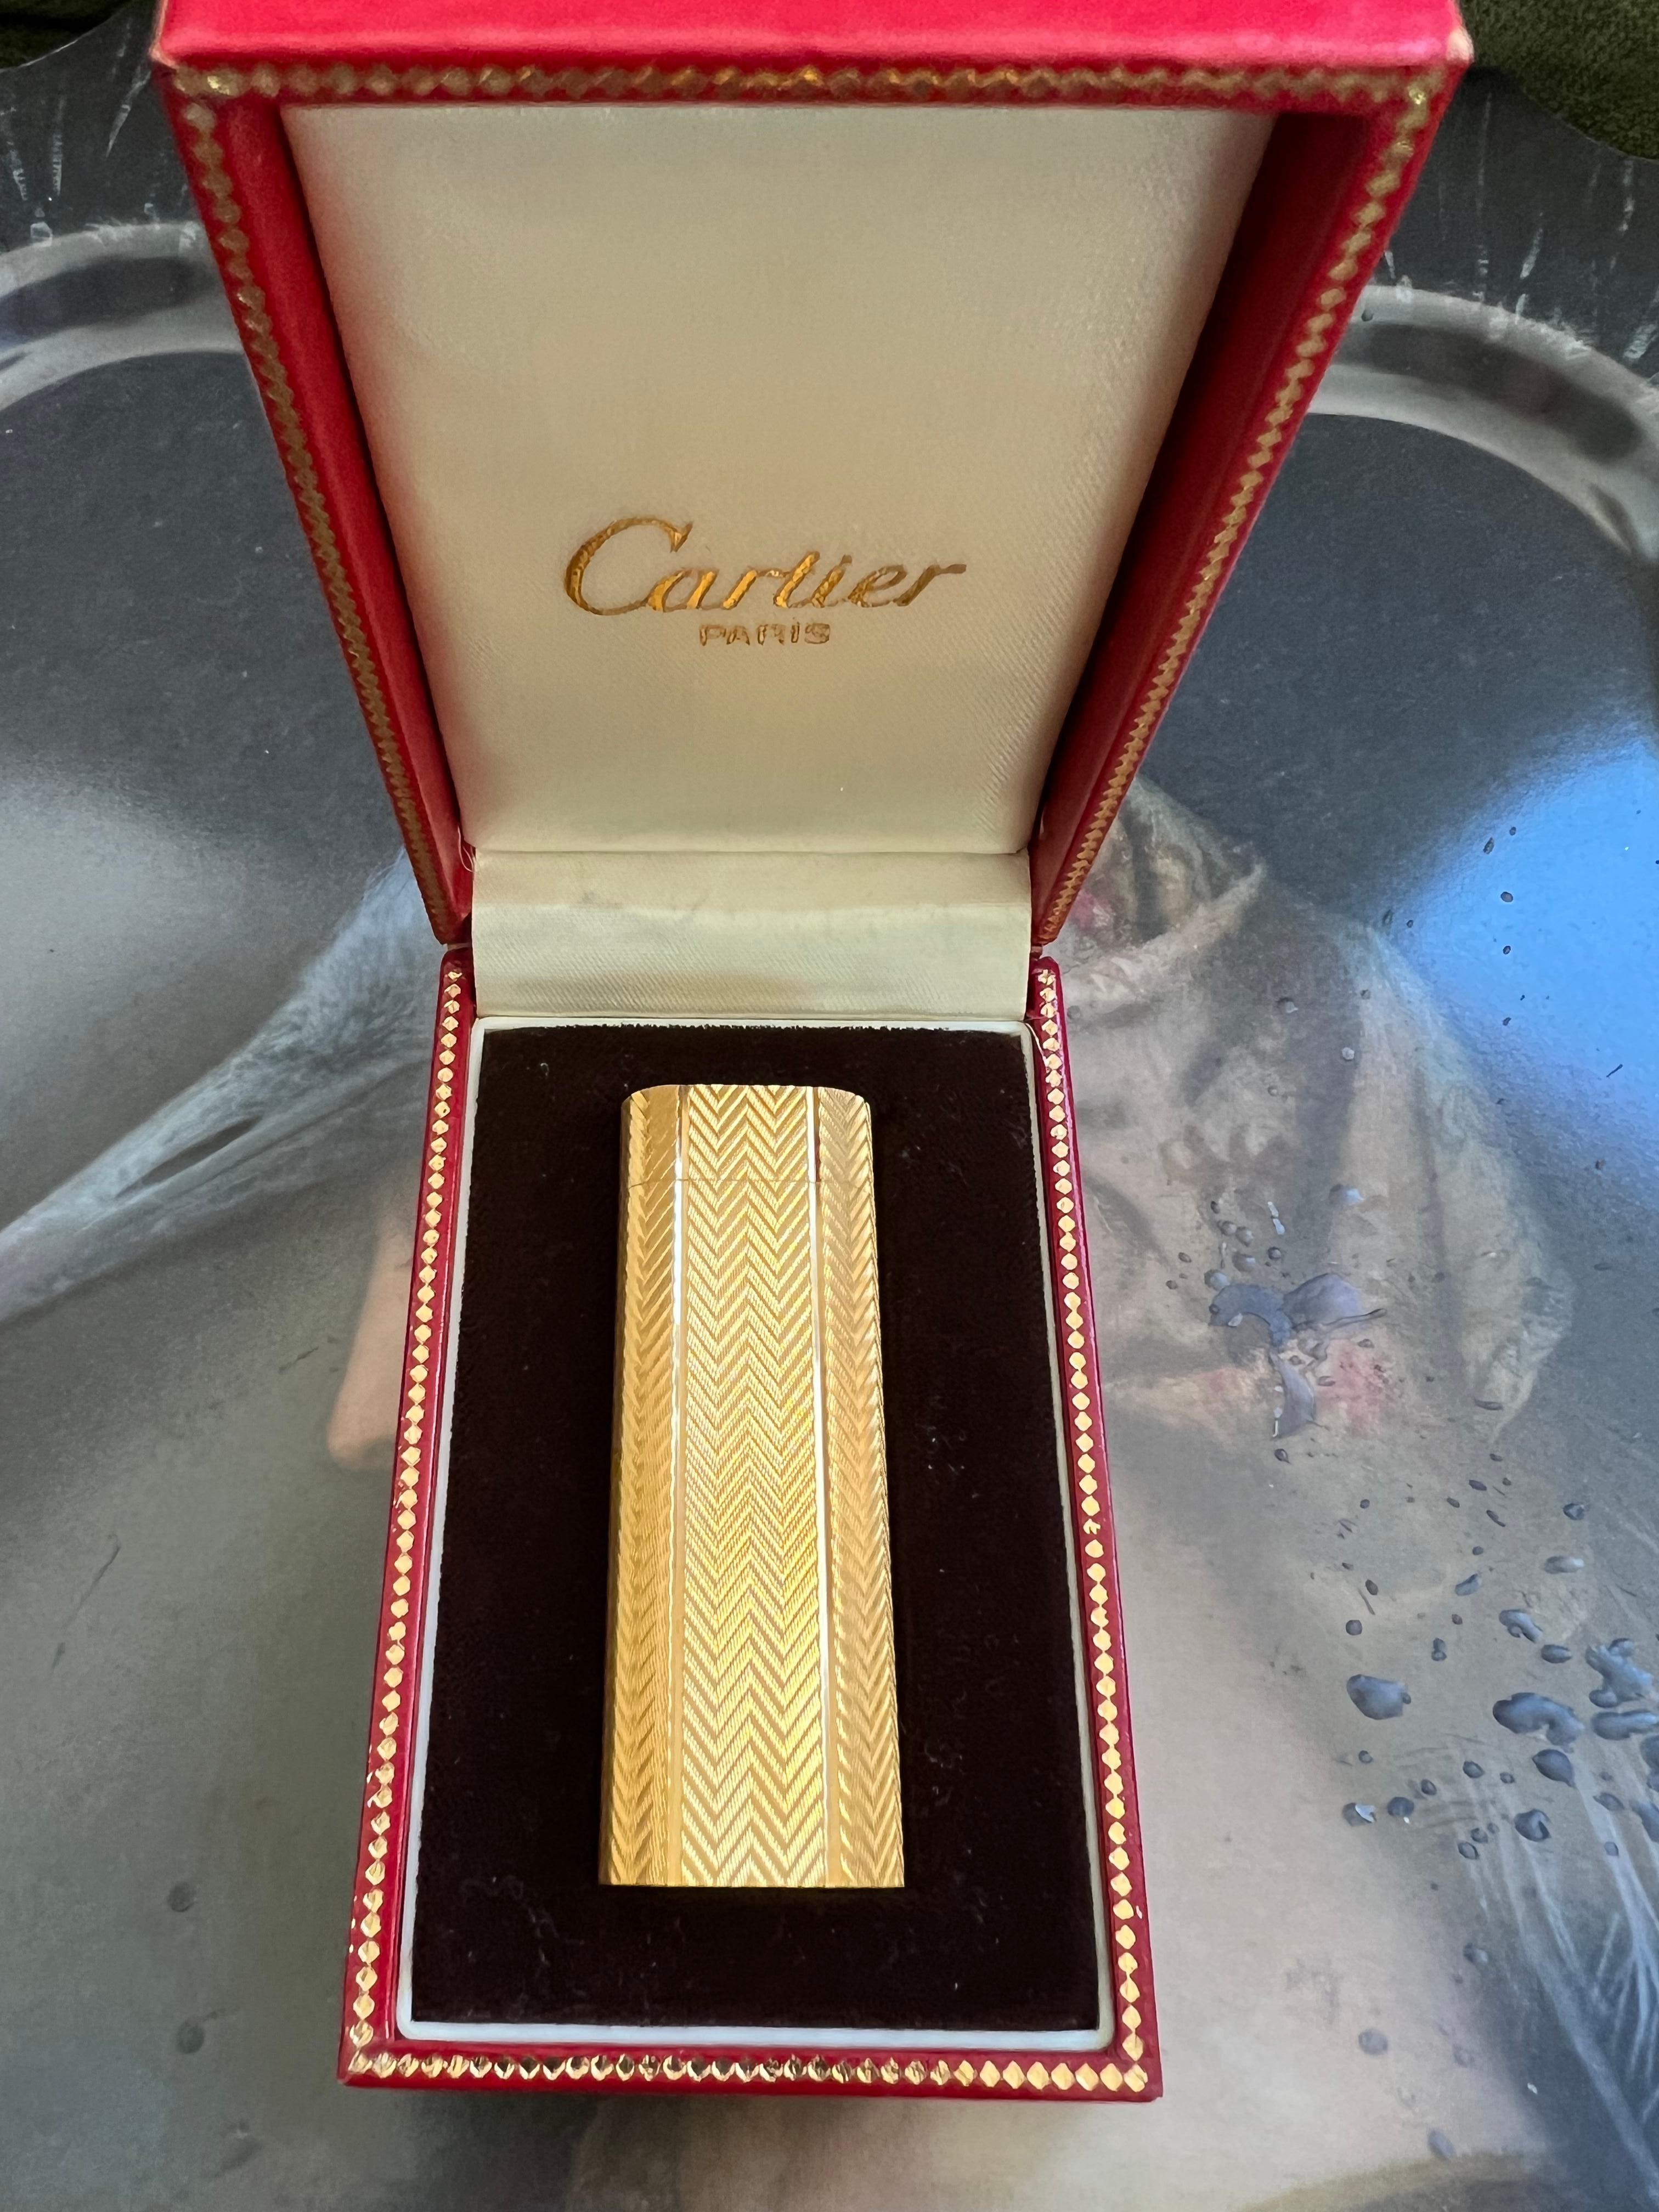 Les Must de Cartier Paris 18k Gold Plated Lighter 2